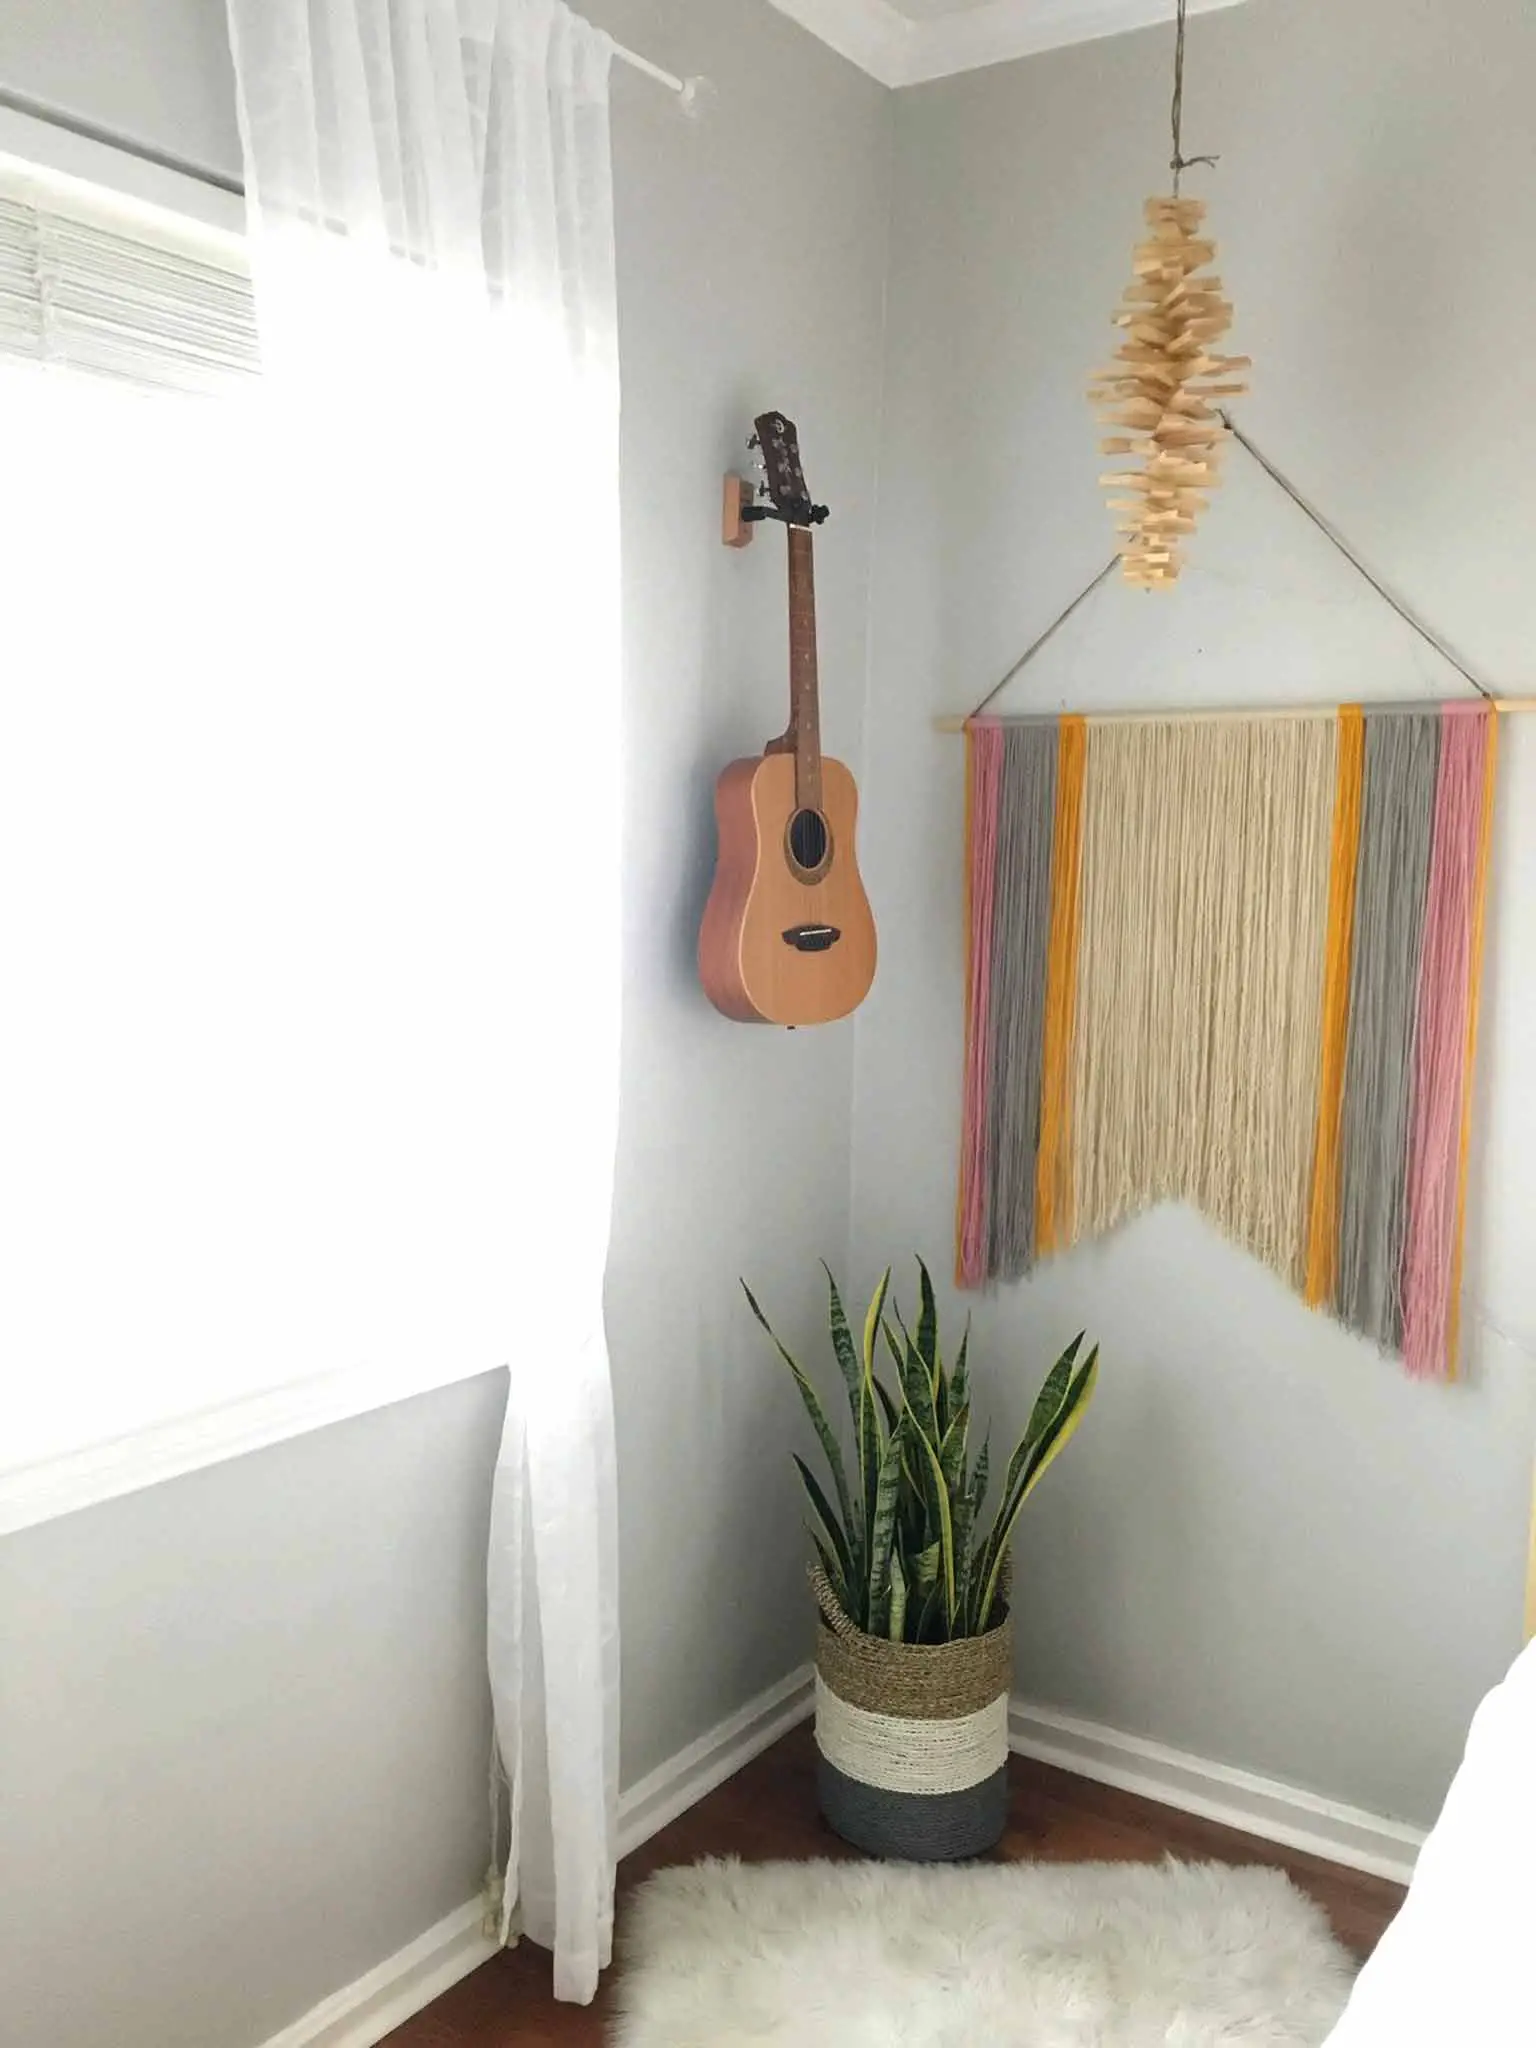 Yarn art and guitar hanging on the wall - modern boho tween bedroom - That Homebird Life Blog